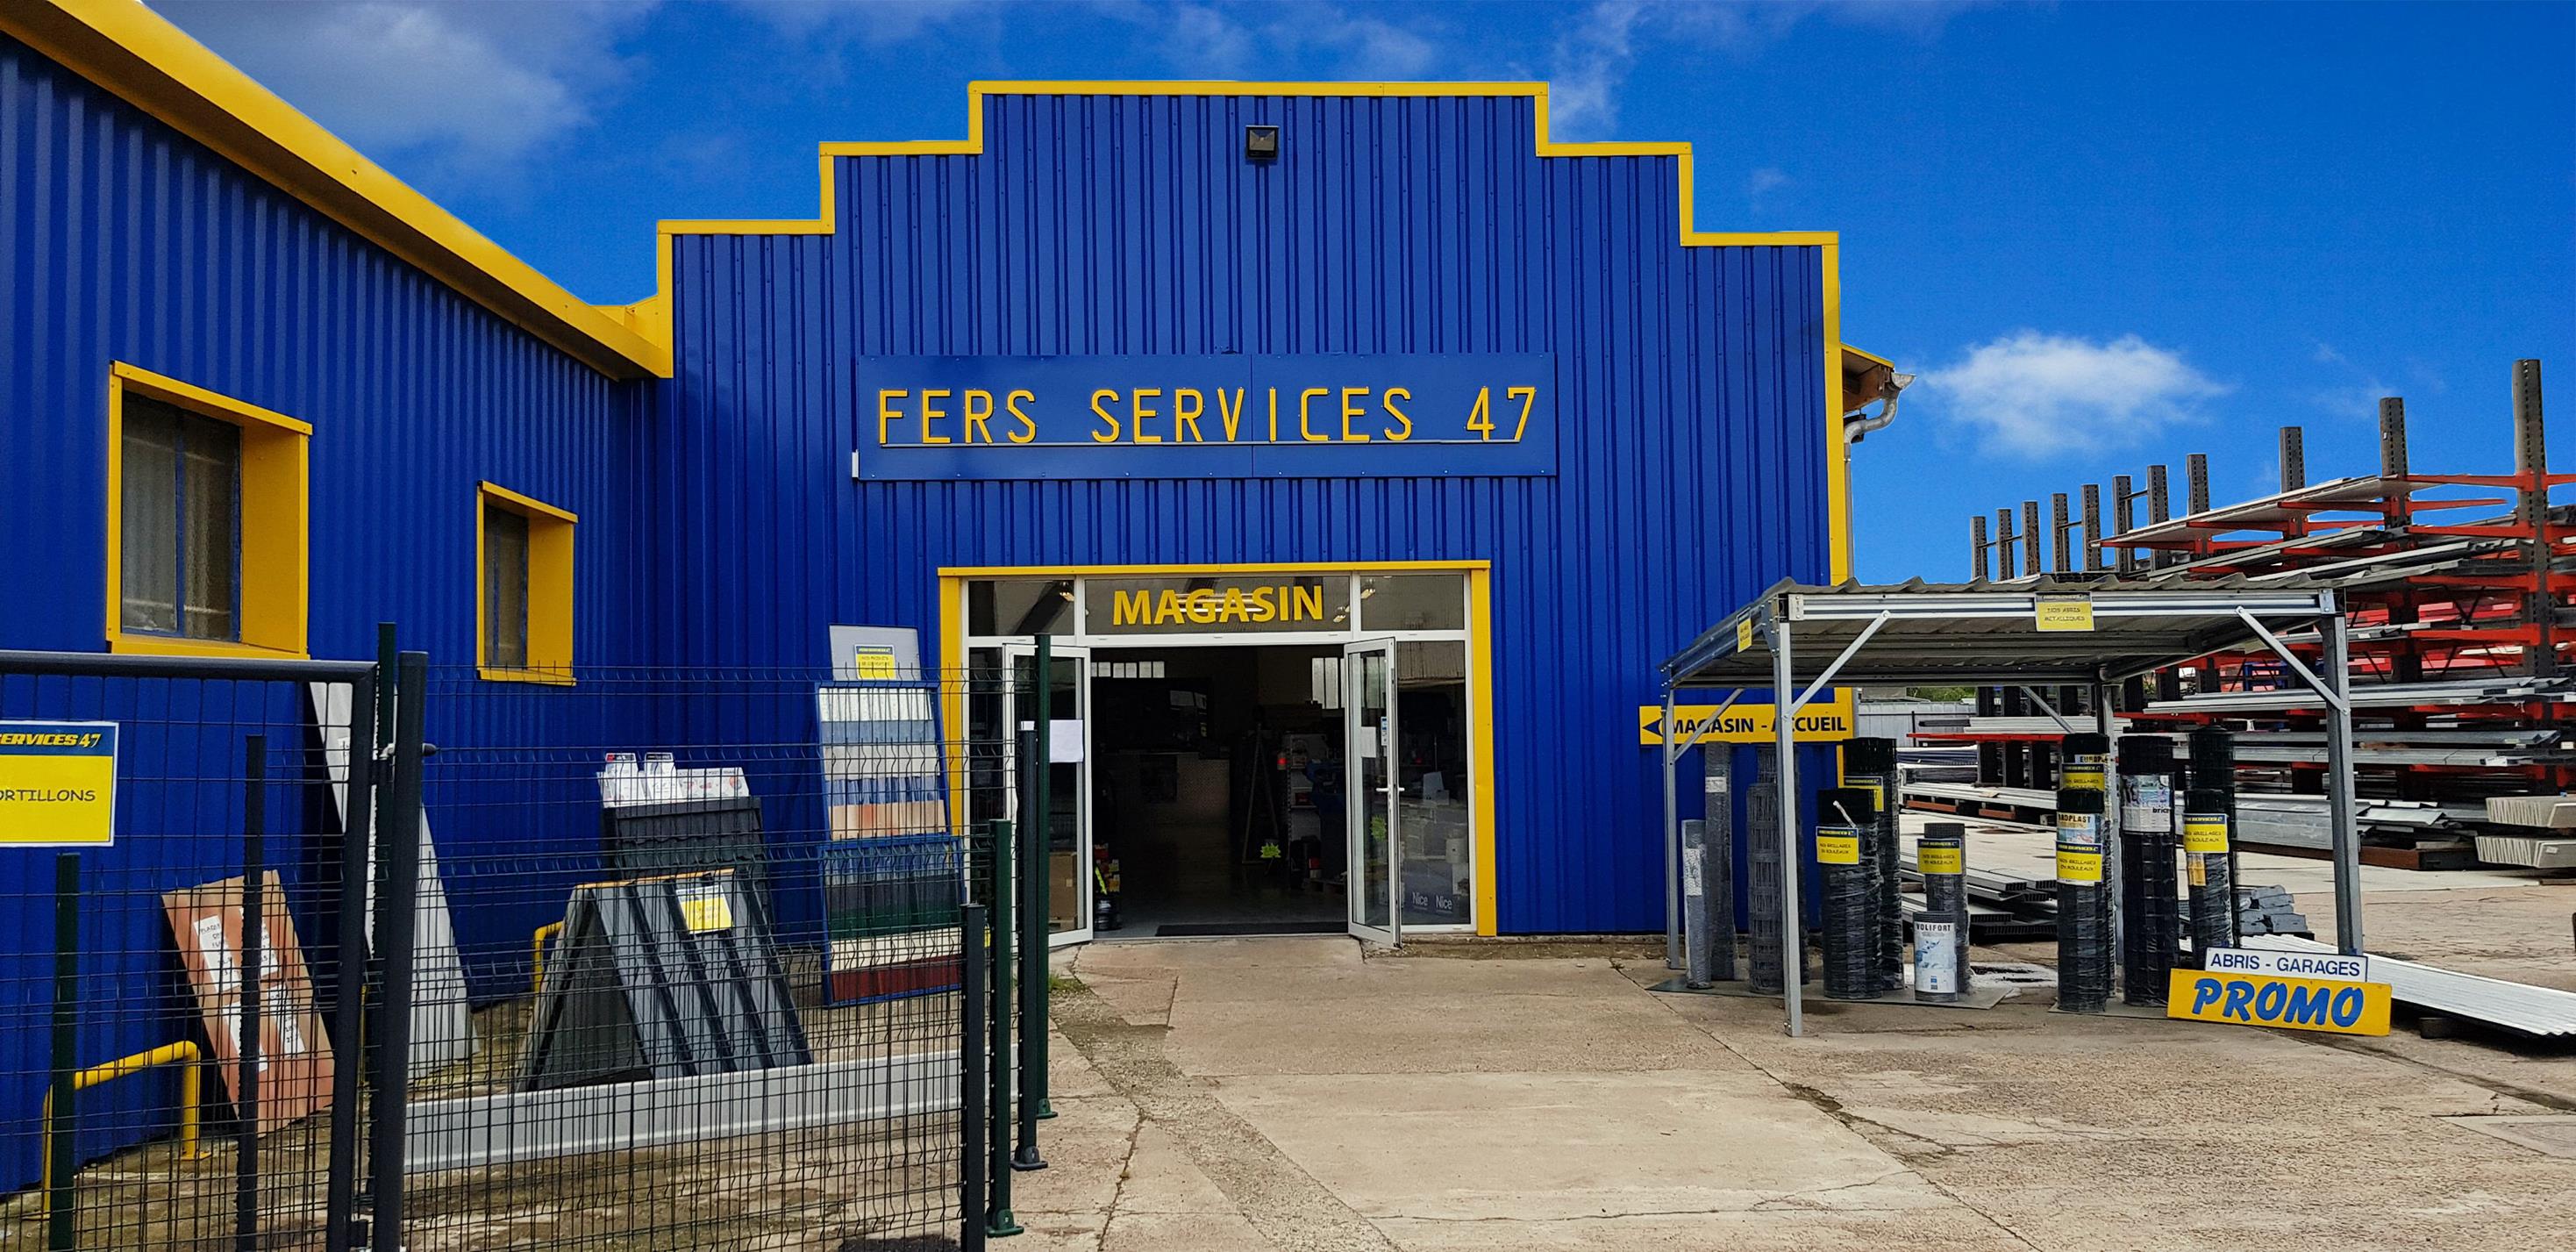 Fers Services 47